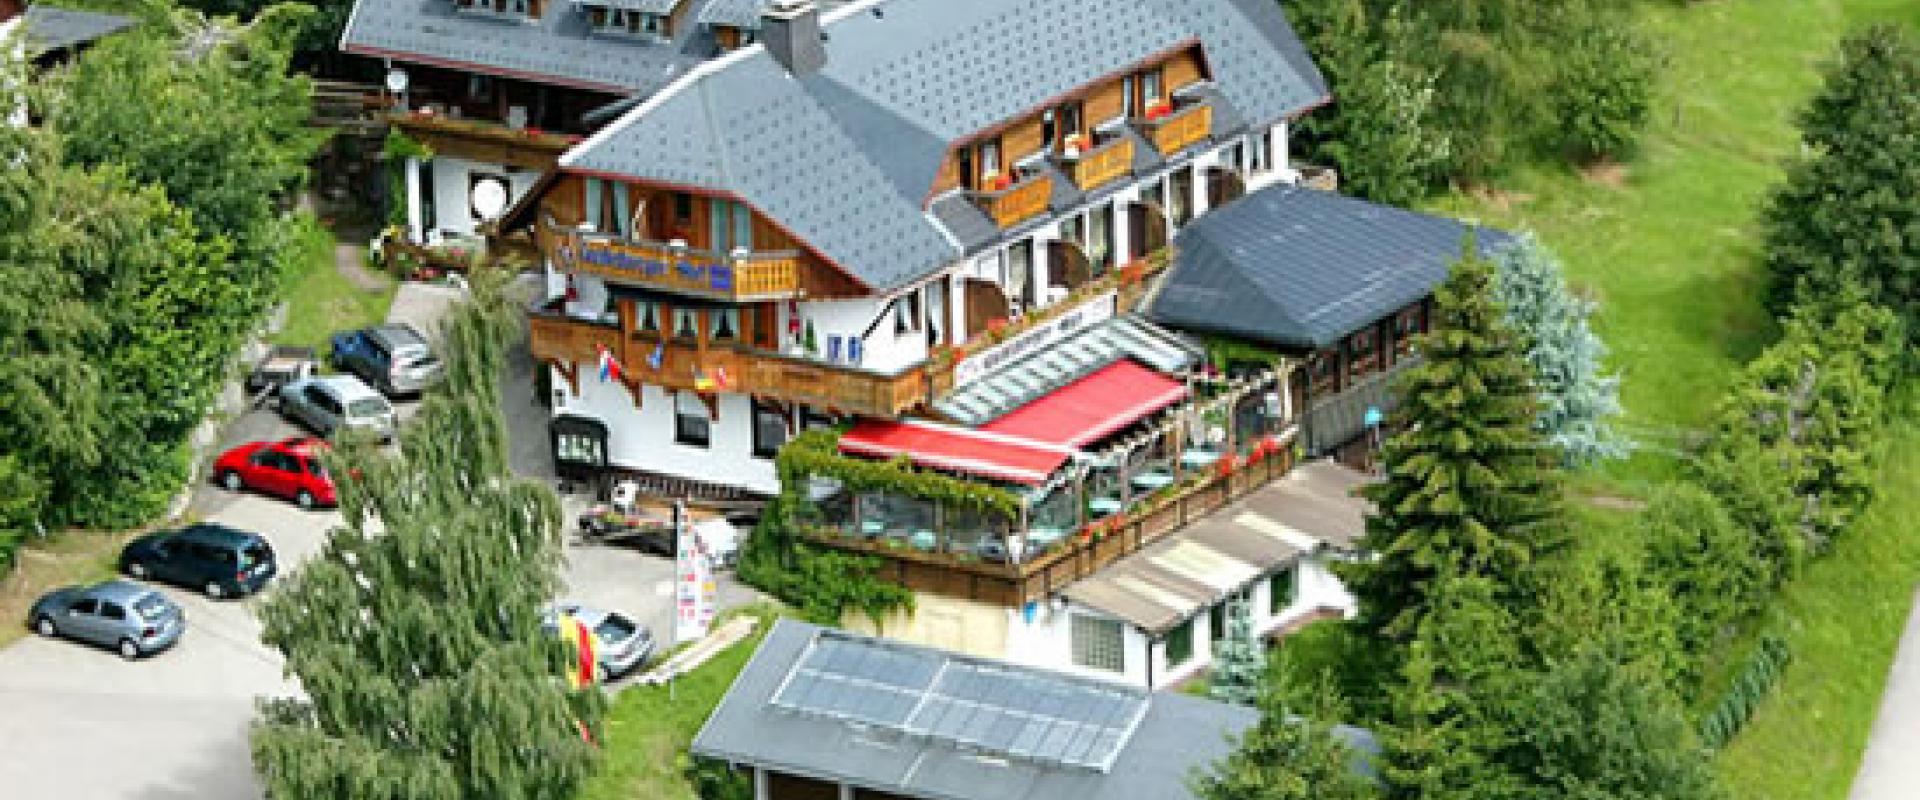 12453 Motorrad Hotel Dachsberger Hof im Schwarzwald.jpg